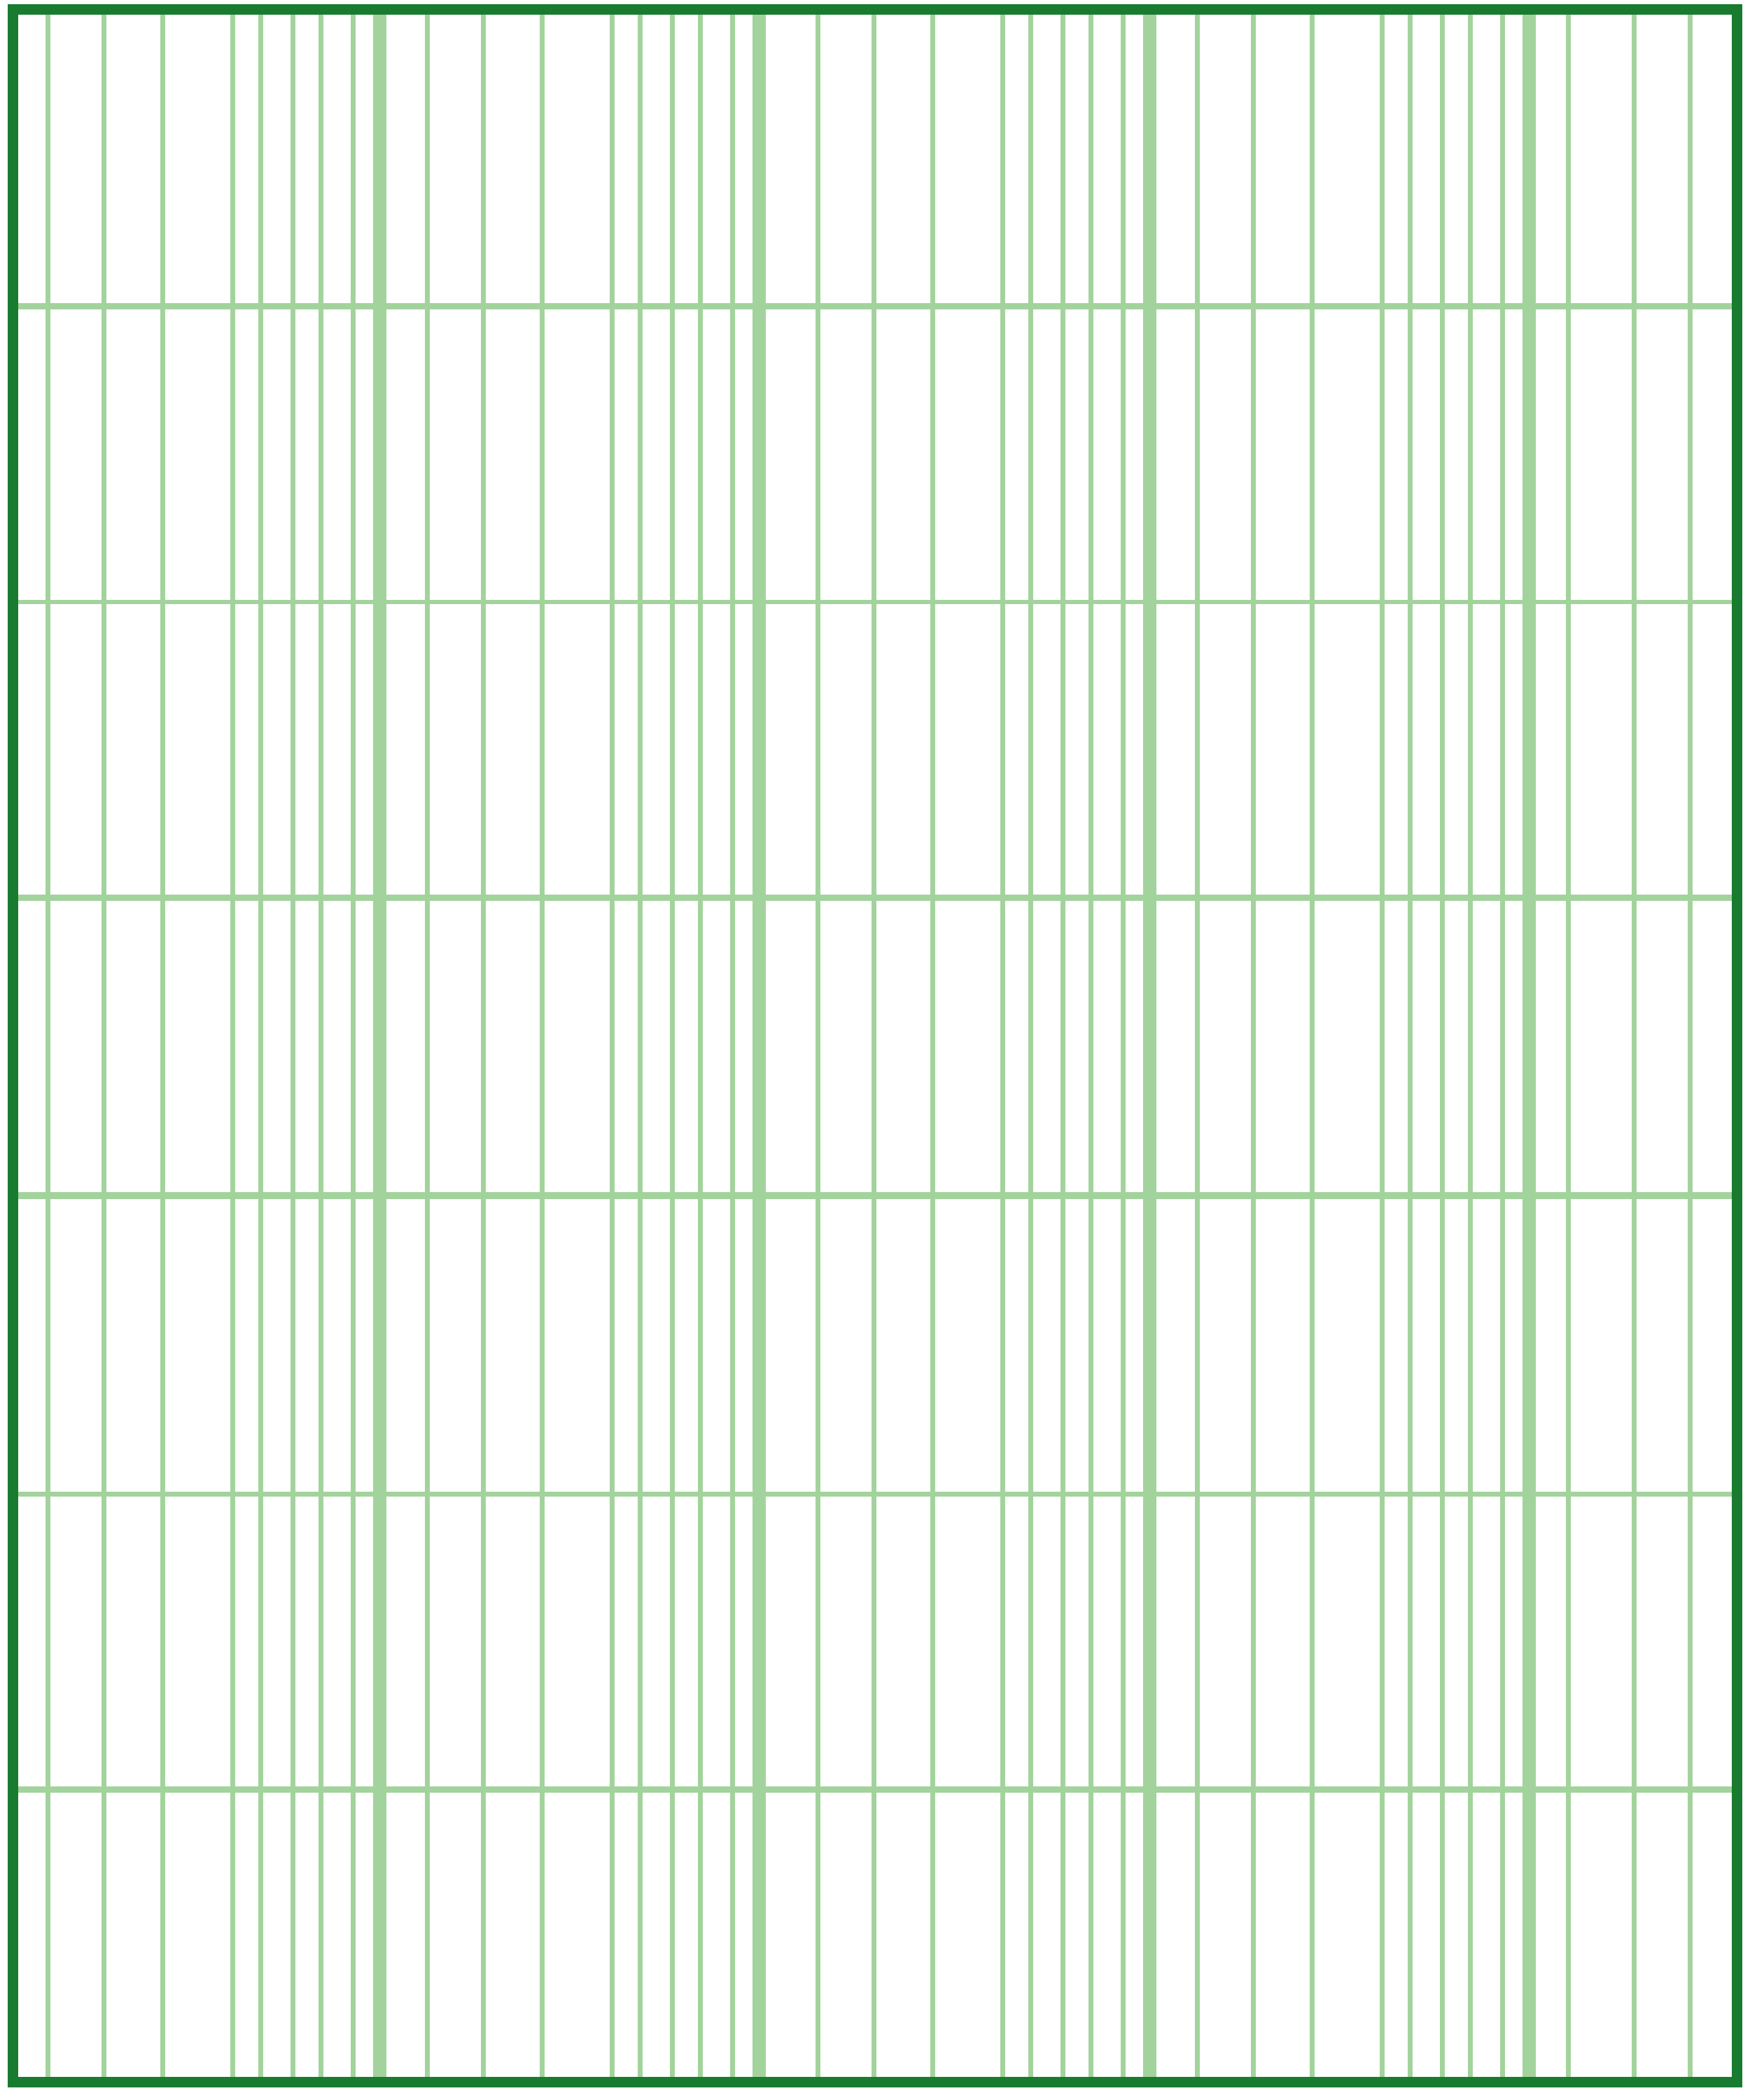 Blank Logarithmic Graph Paper